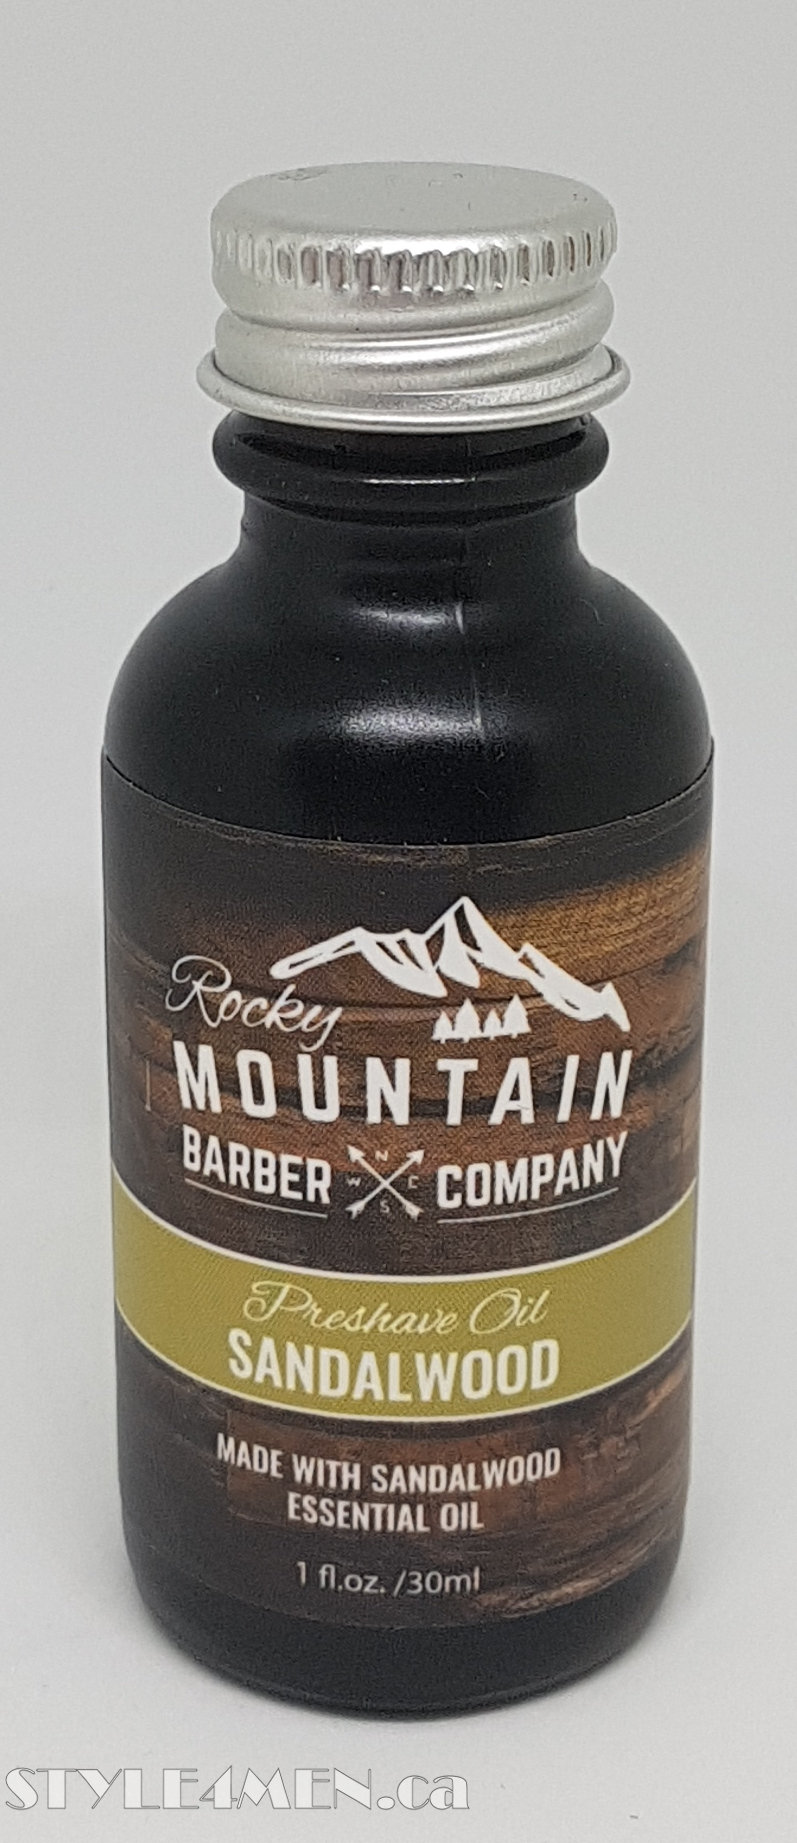 Rocky Mountain Barber Co. Pre-Shave Oil – Sandalwood delight